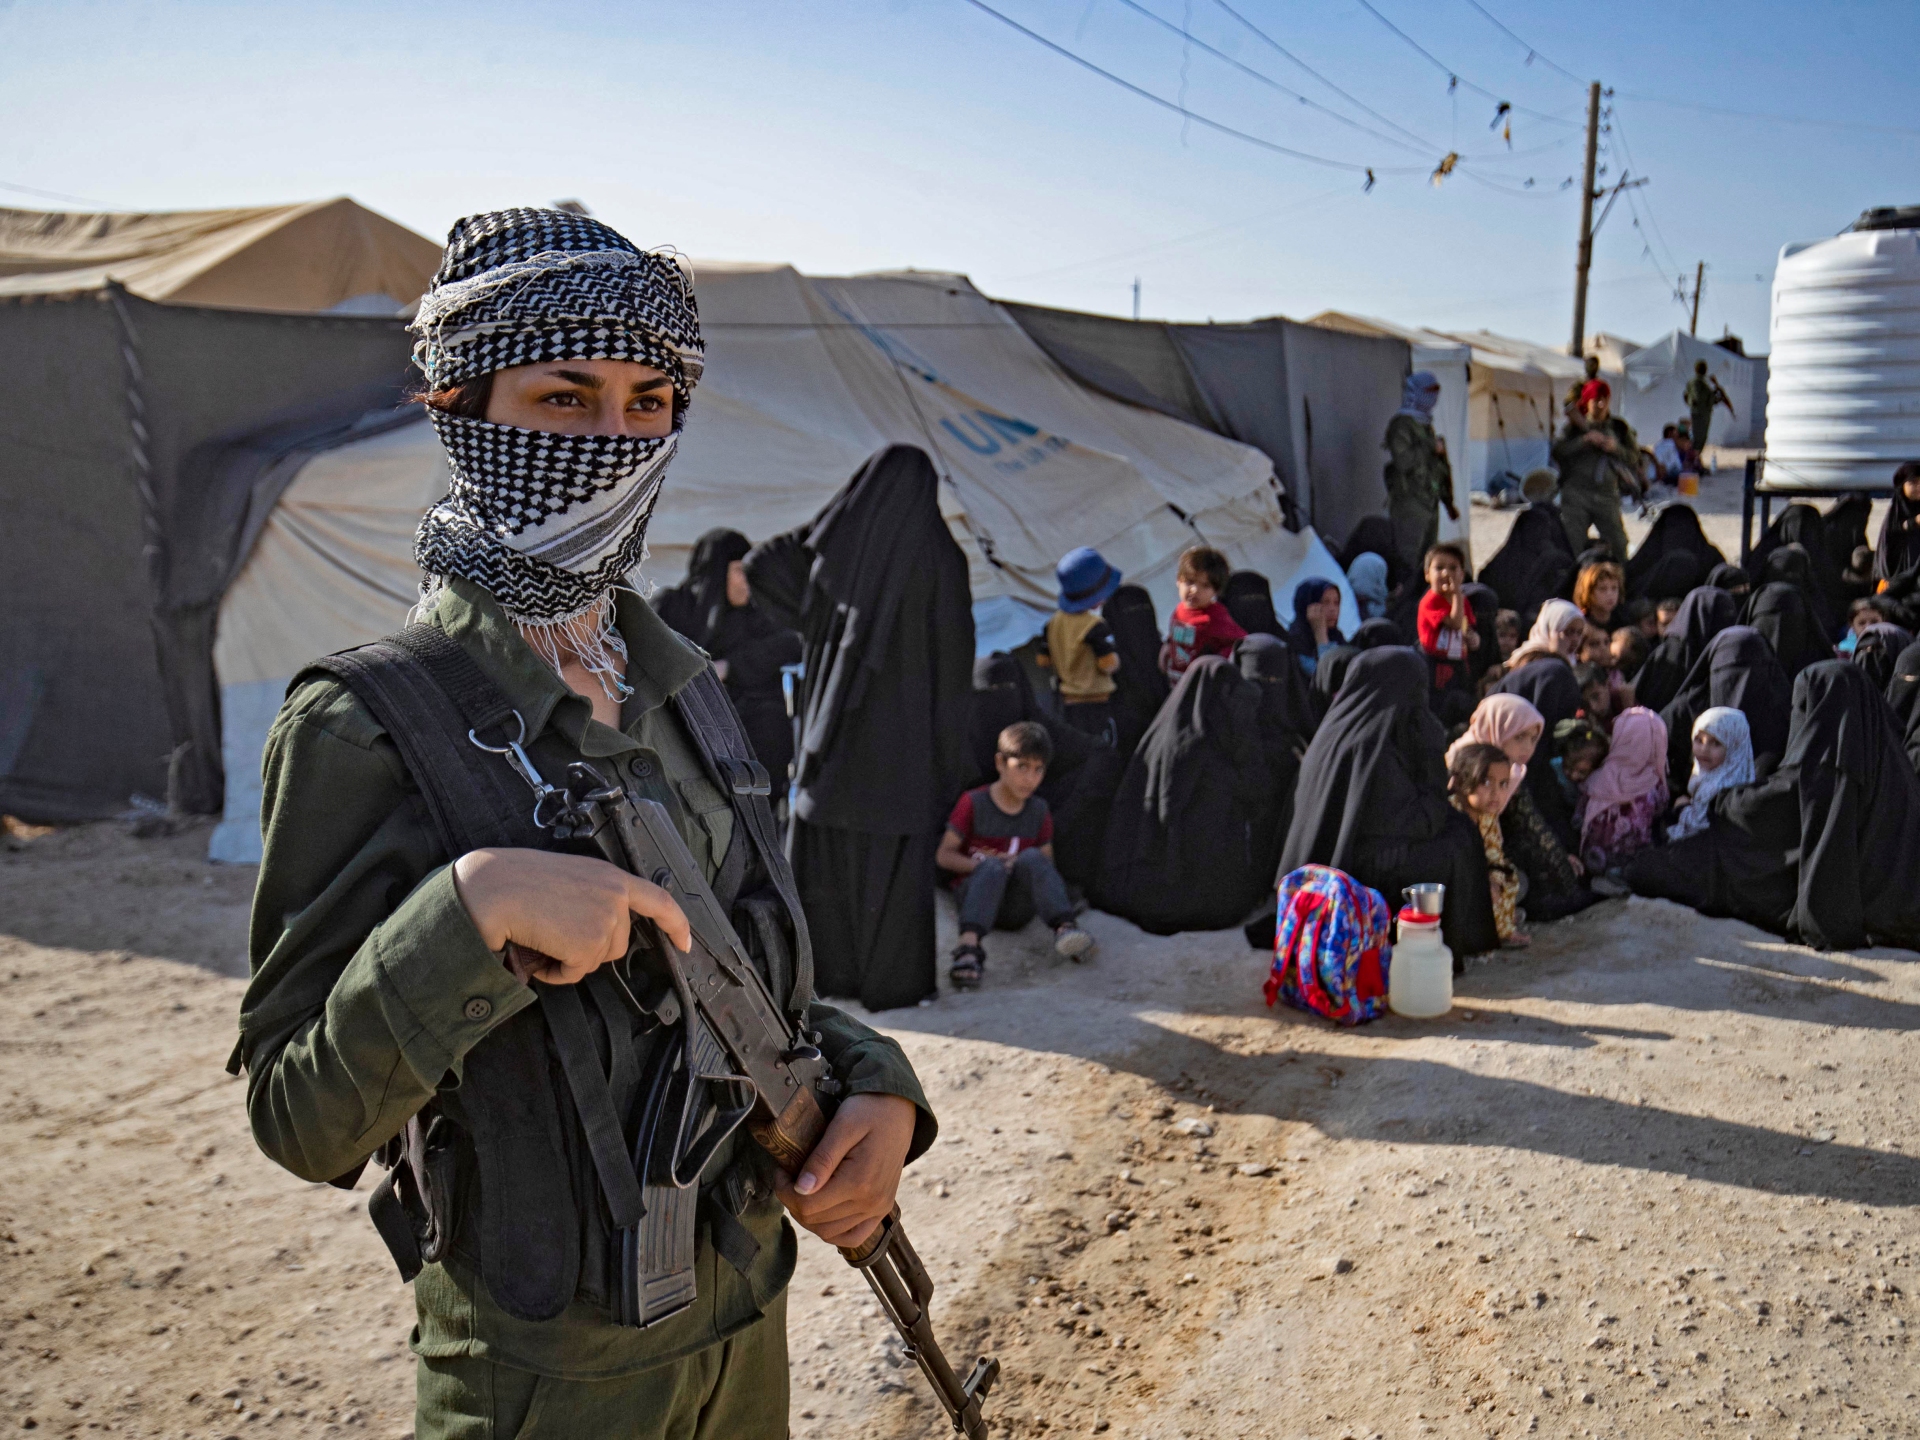 Canada to repatriate 23 citizens held in Syria camps